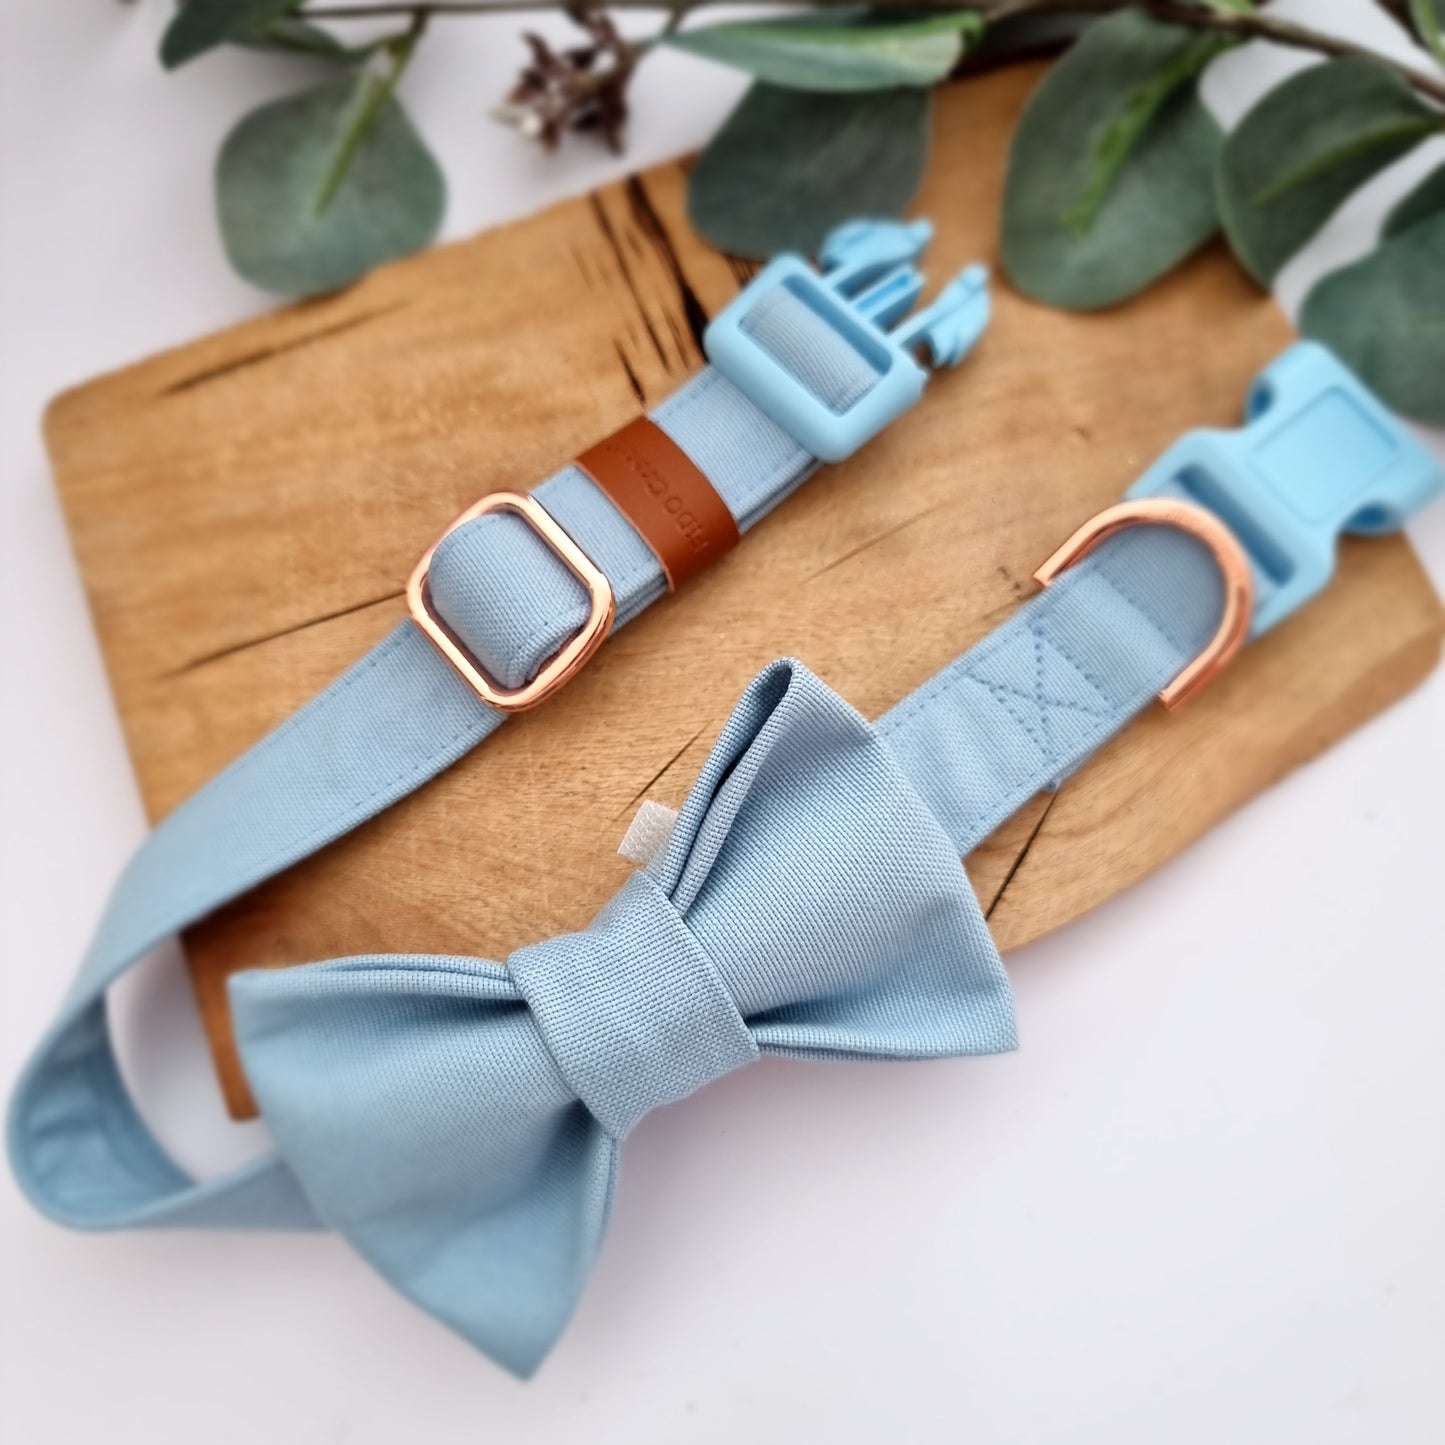 Sky Blue bow tie